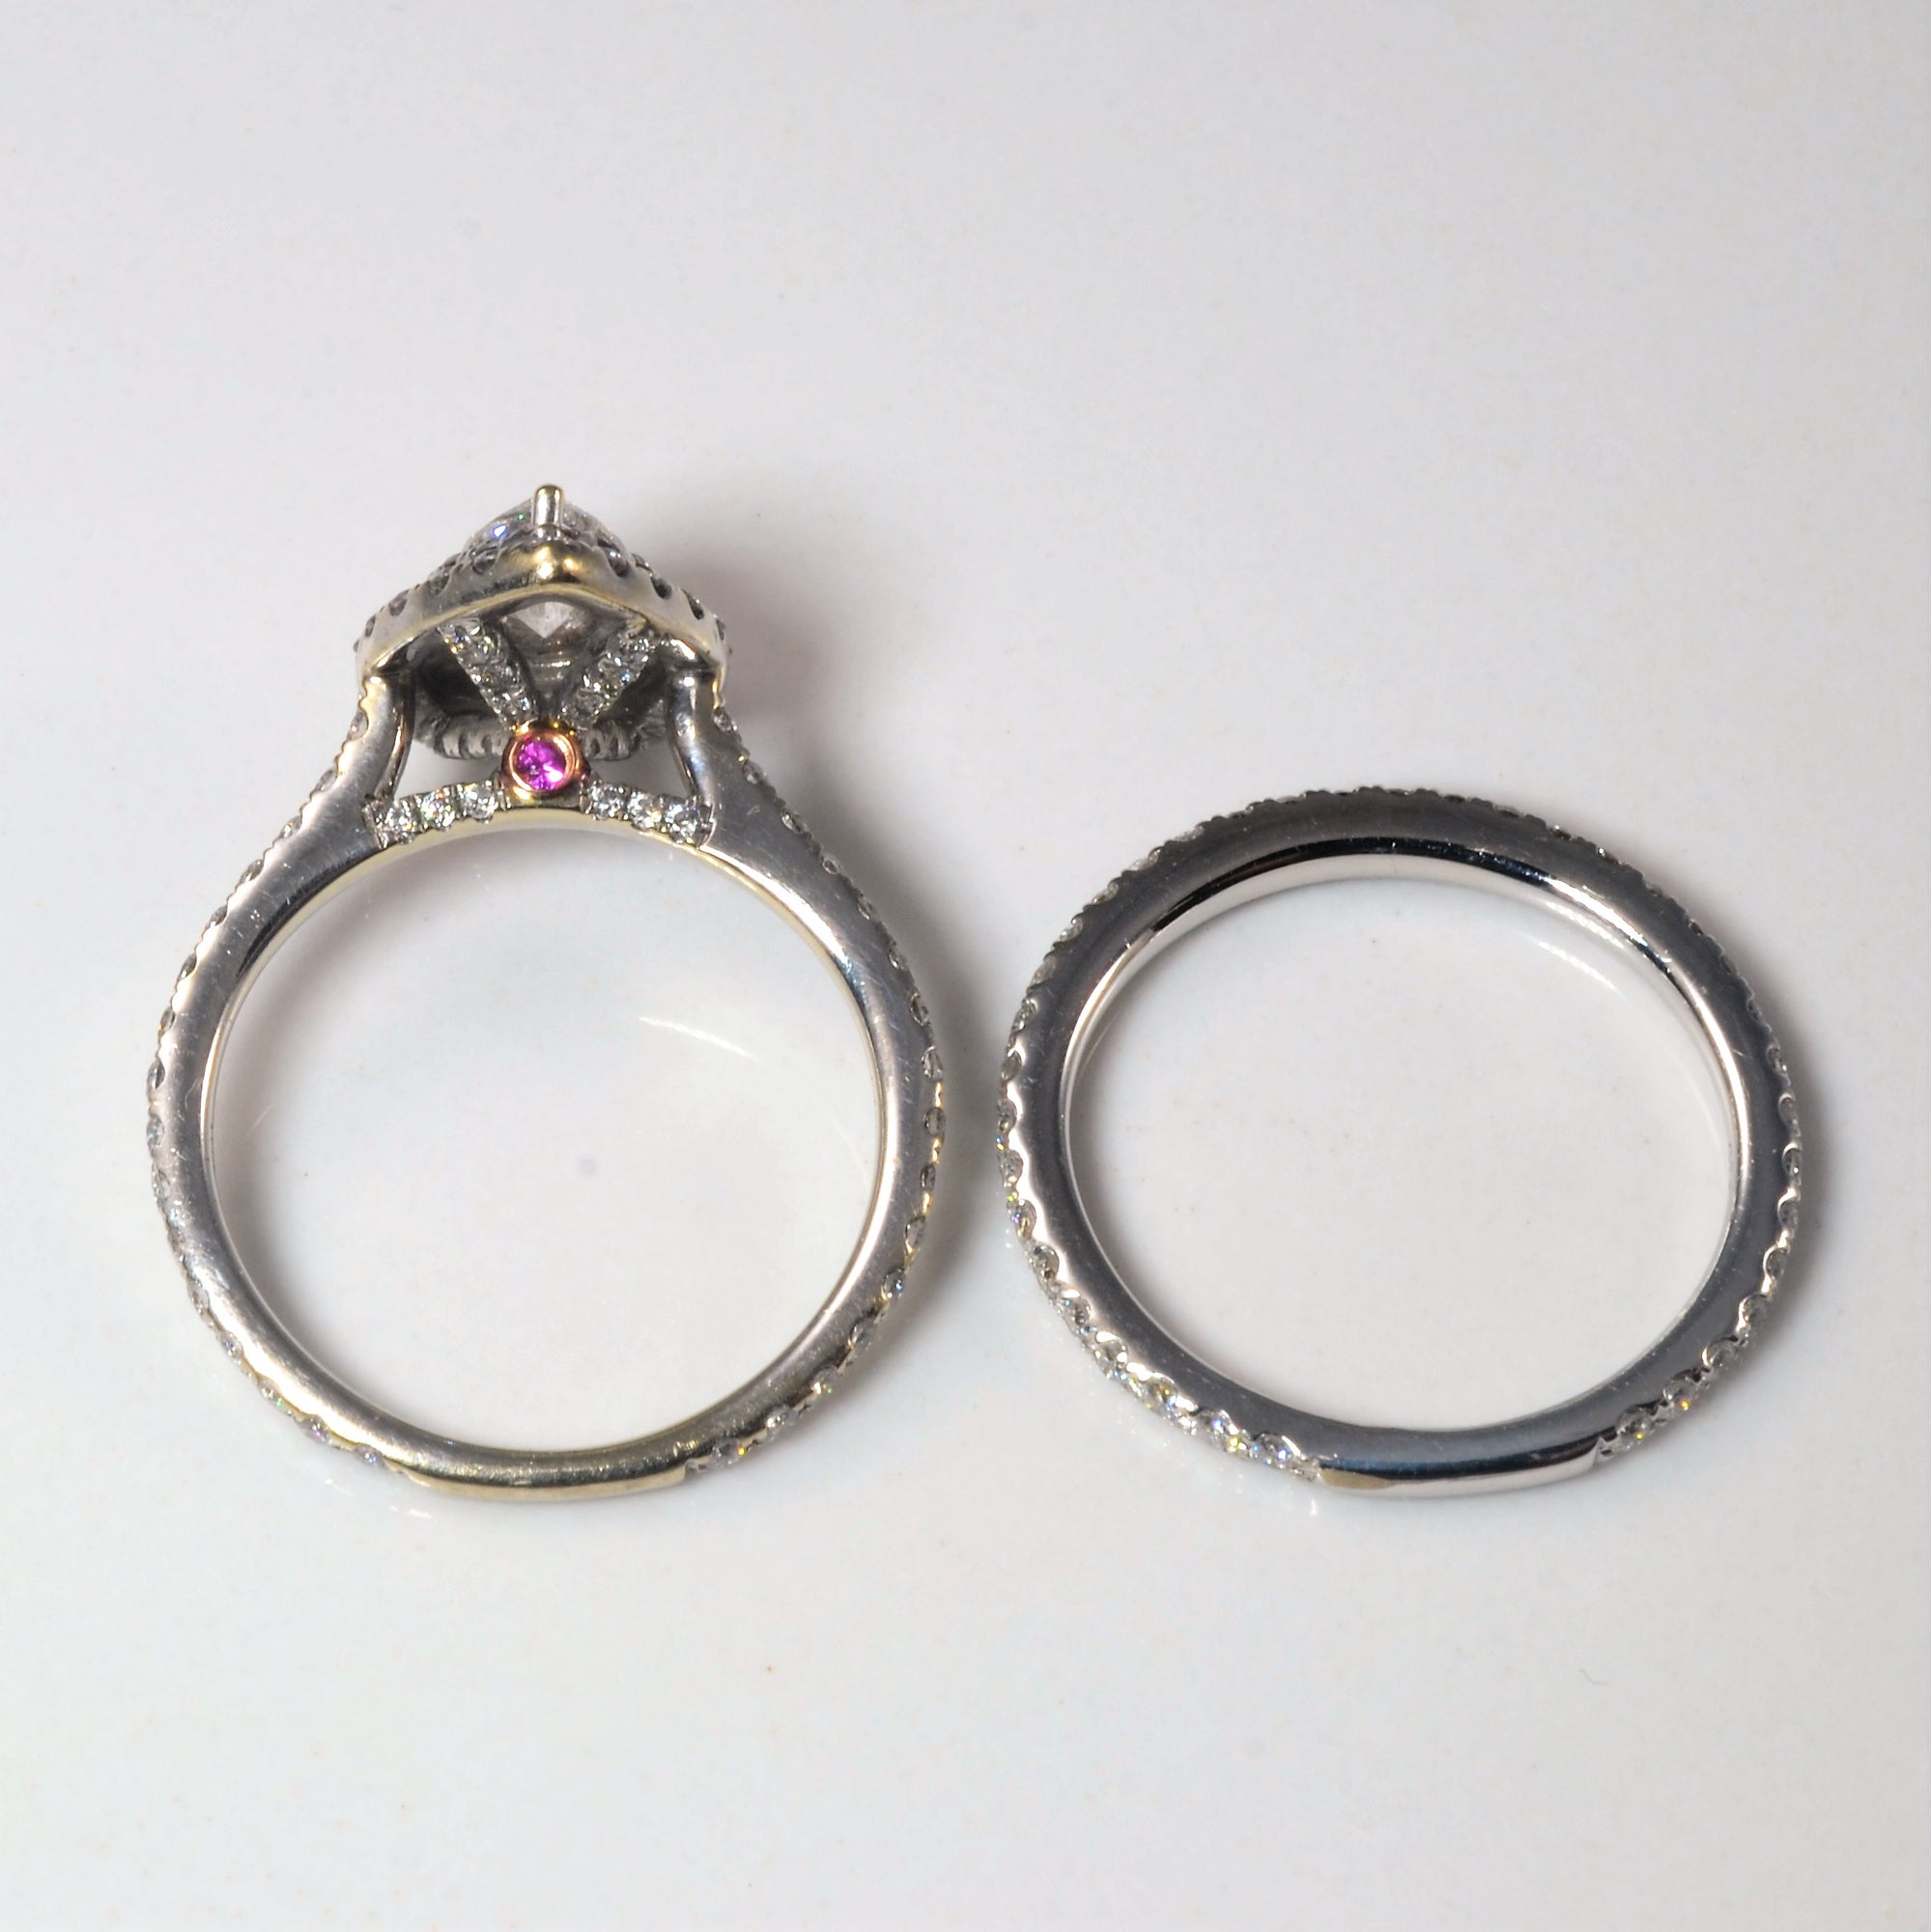 Michael Hill' Pear Cut Double Halo Diamond Wedding Set | 1.57ctw | SZ 6.5 |